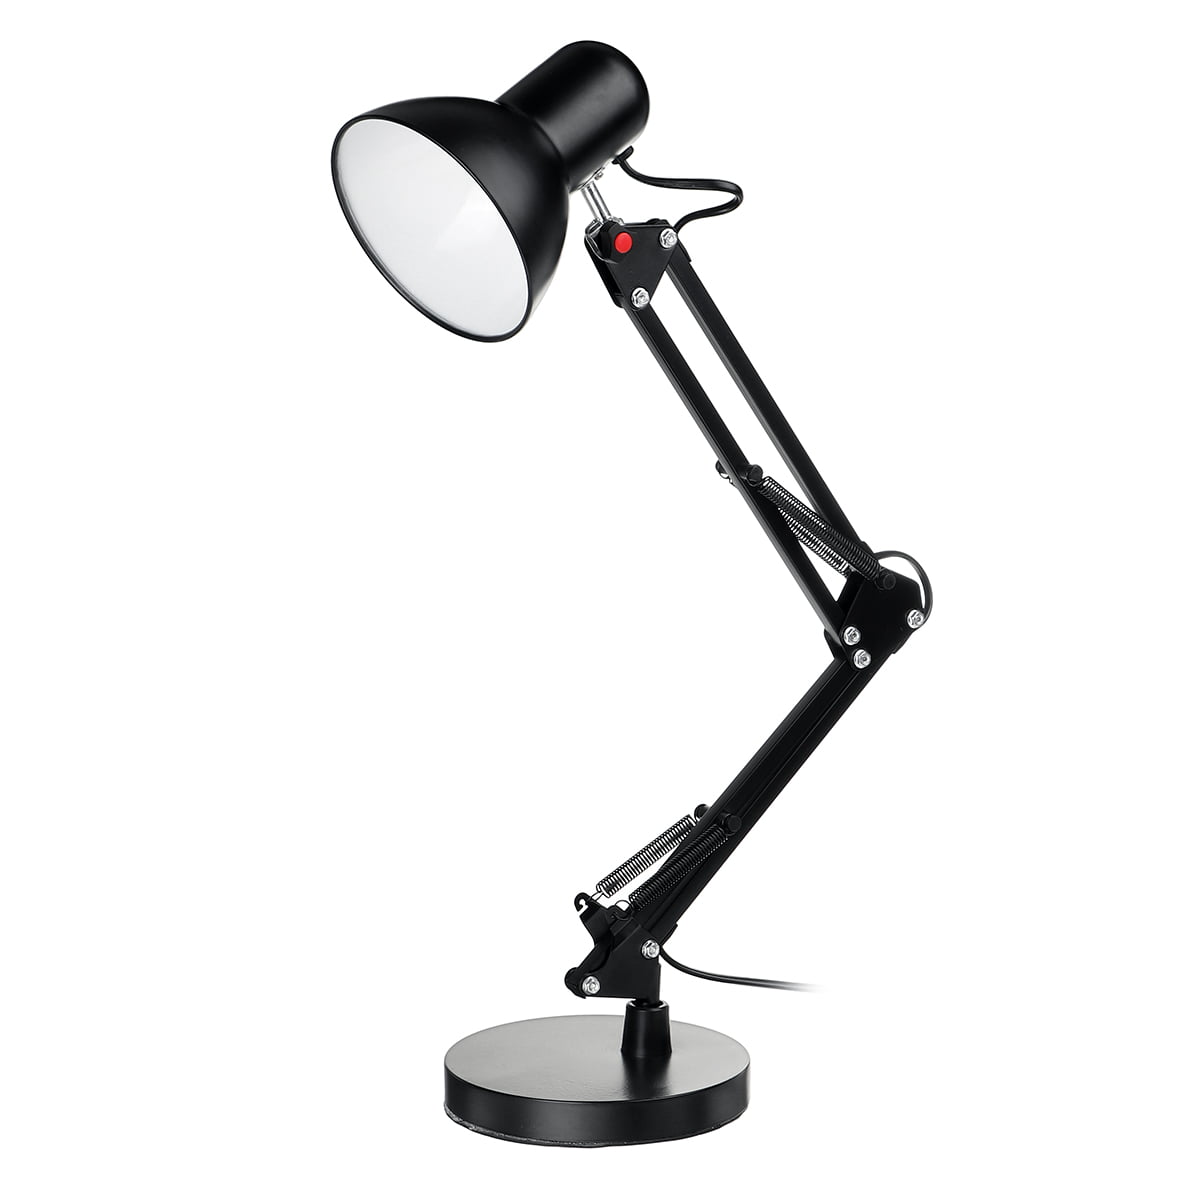 Architect Desk Lamp, Metal Swing Arm Dimmable Led Lamp, Tall Task Light